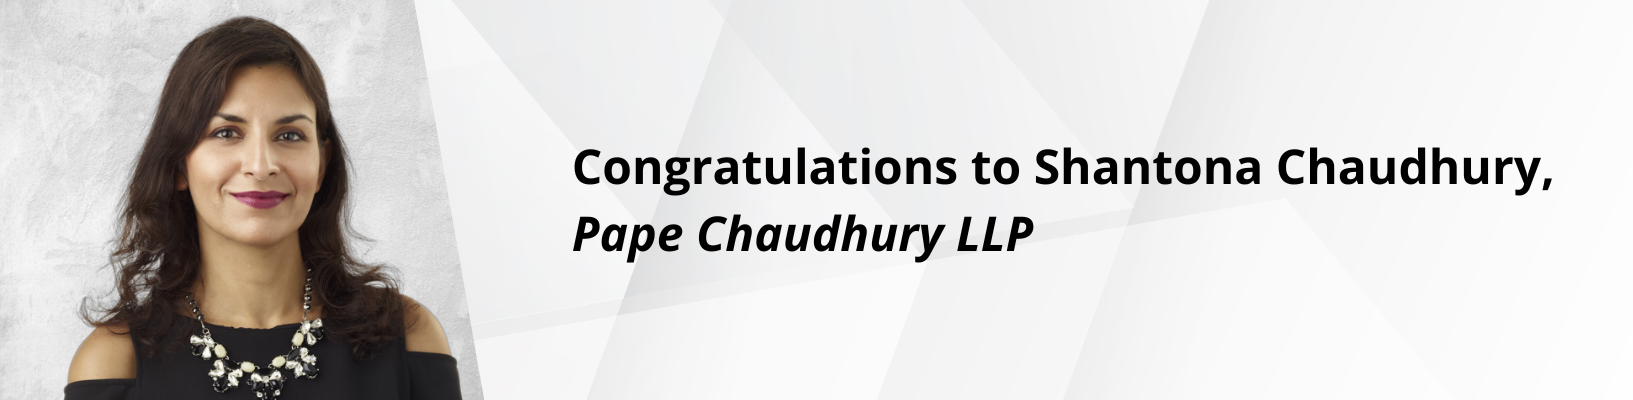 Congratulations to Shantona Chaudhury, Pape Chaudhury LLP